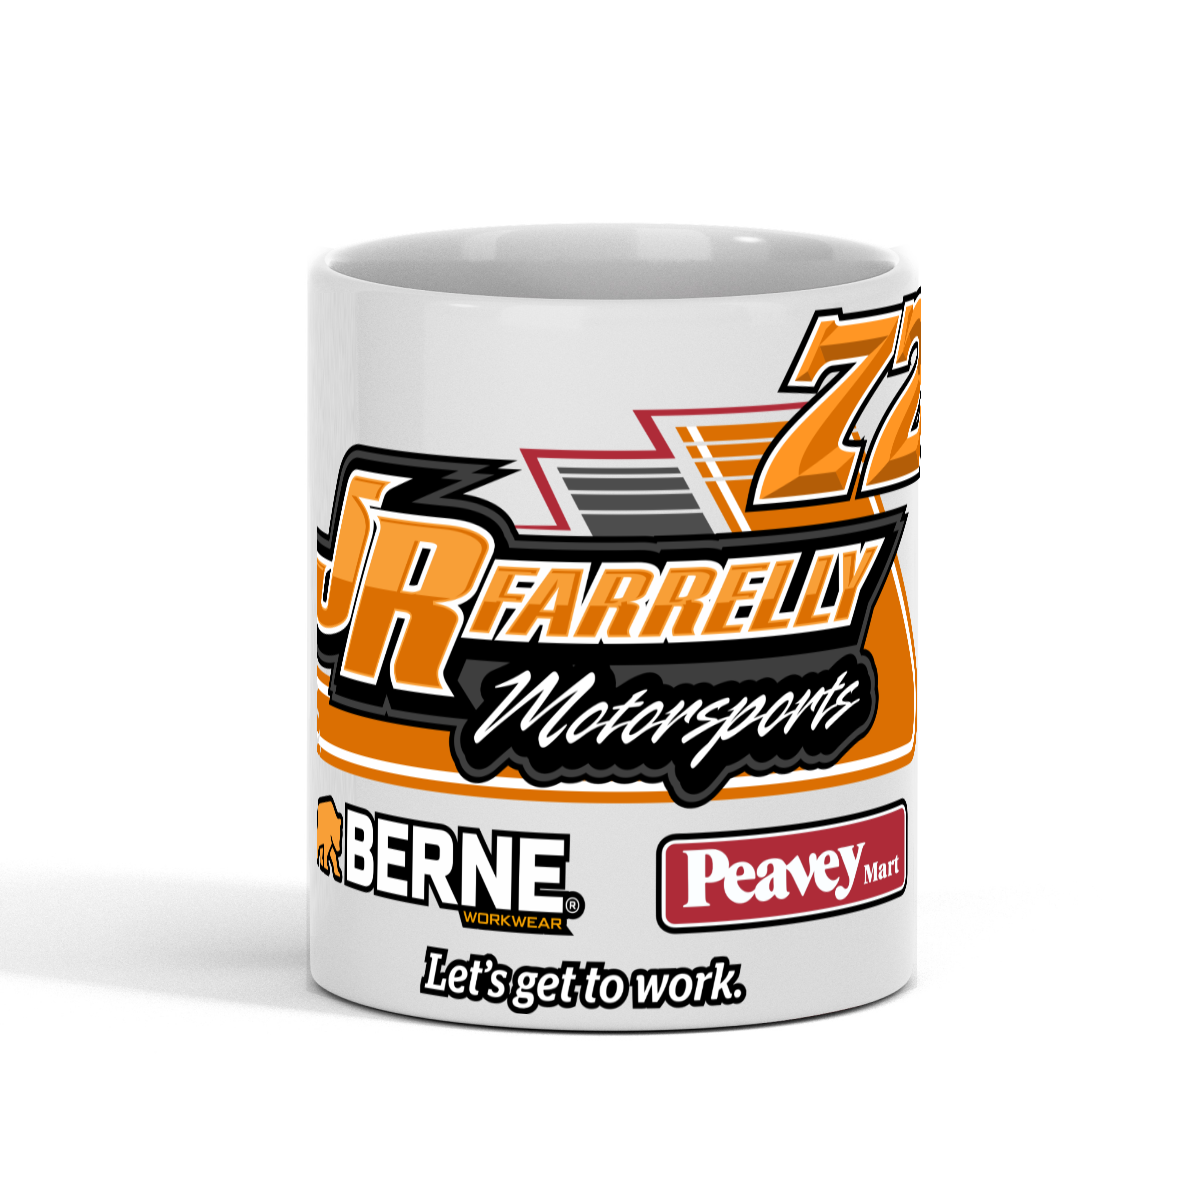 Jr. Farrelly Motorsports / BERNE-Peavey Racing Coffee Mug